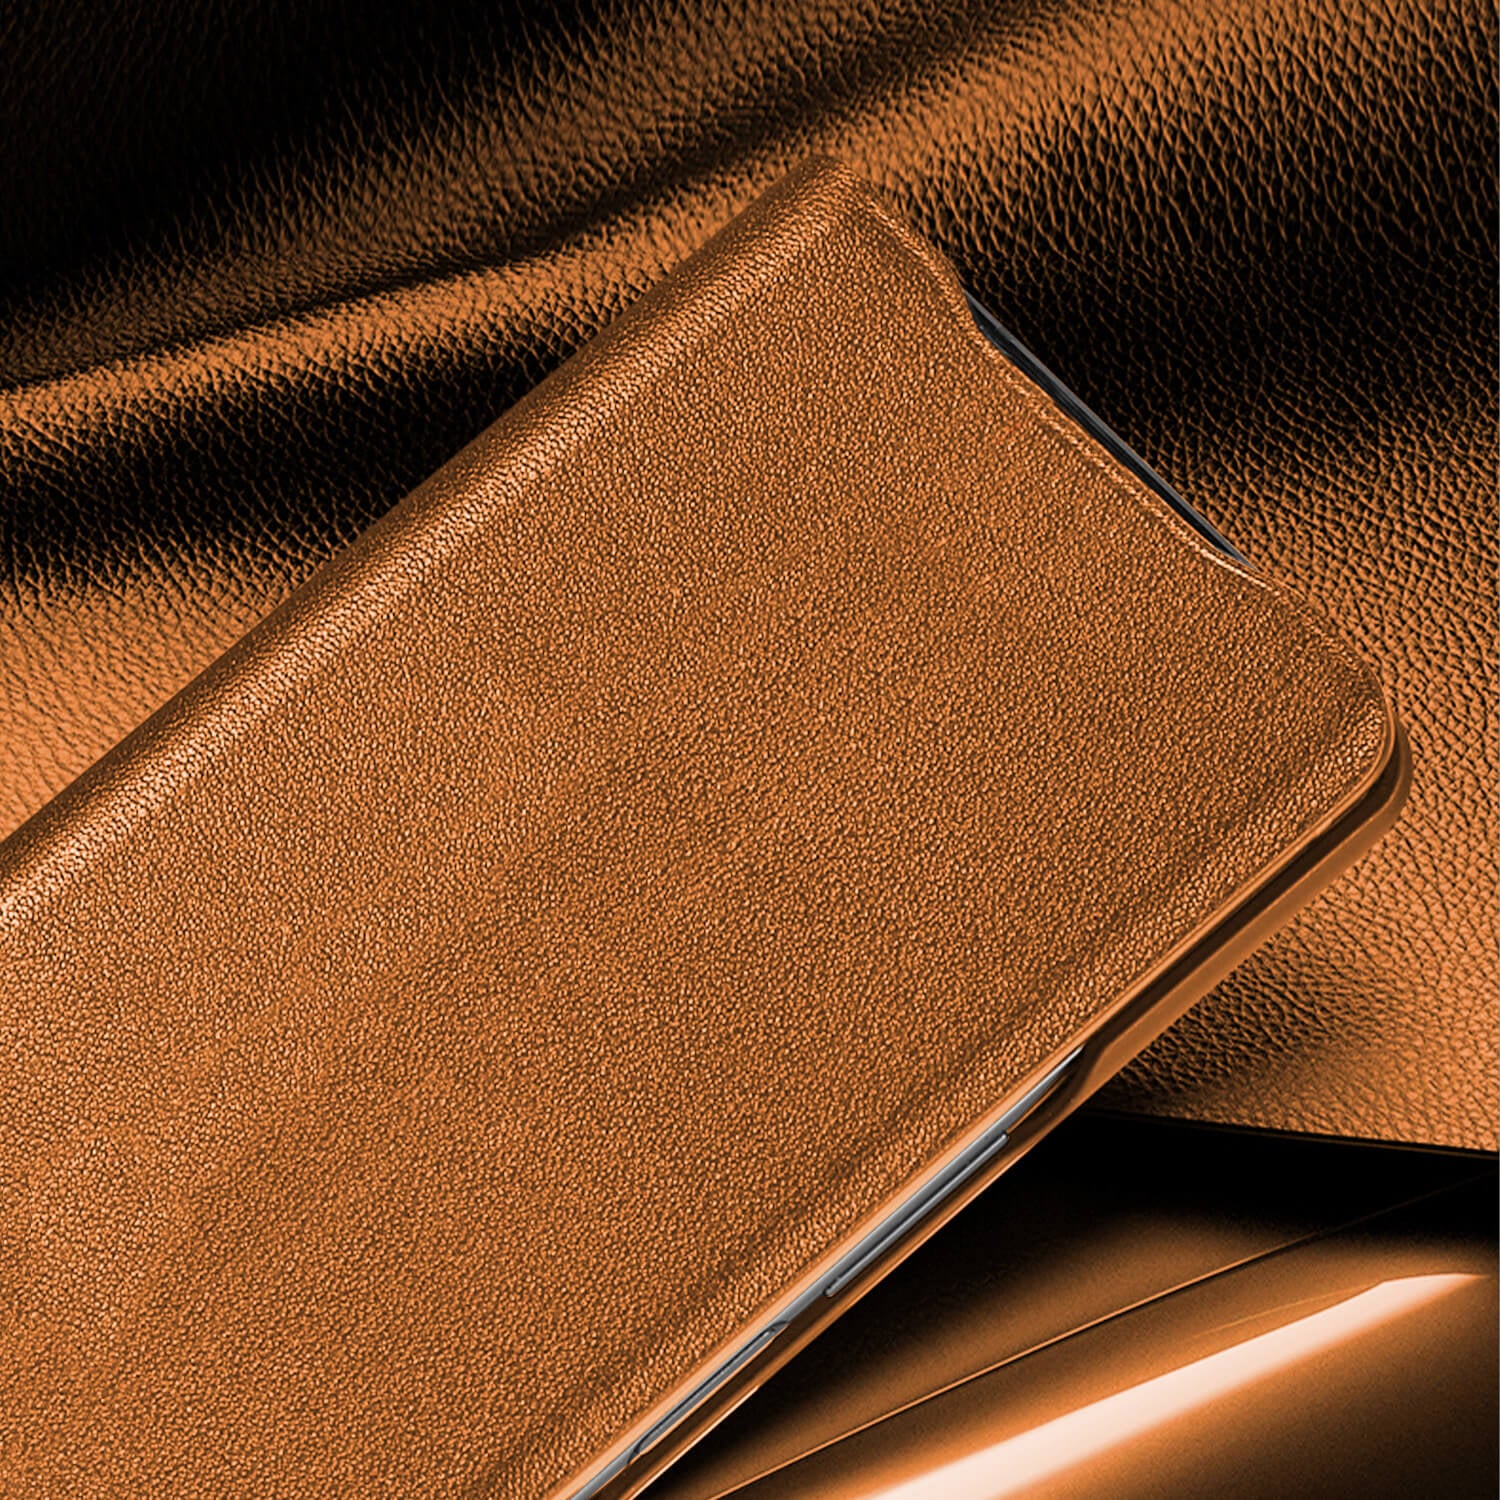 Tough On Samsung Galaxy Z Fold 3 Case Fine Leather Brown